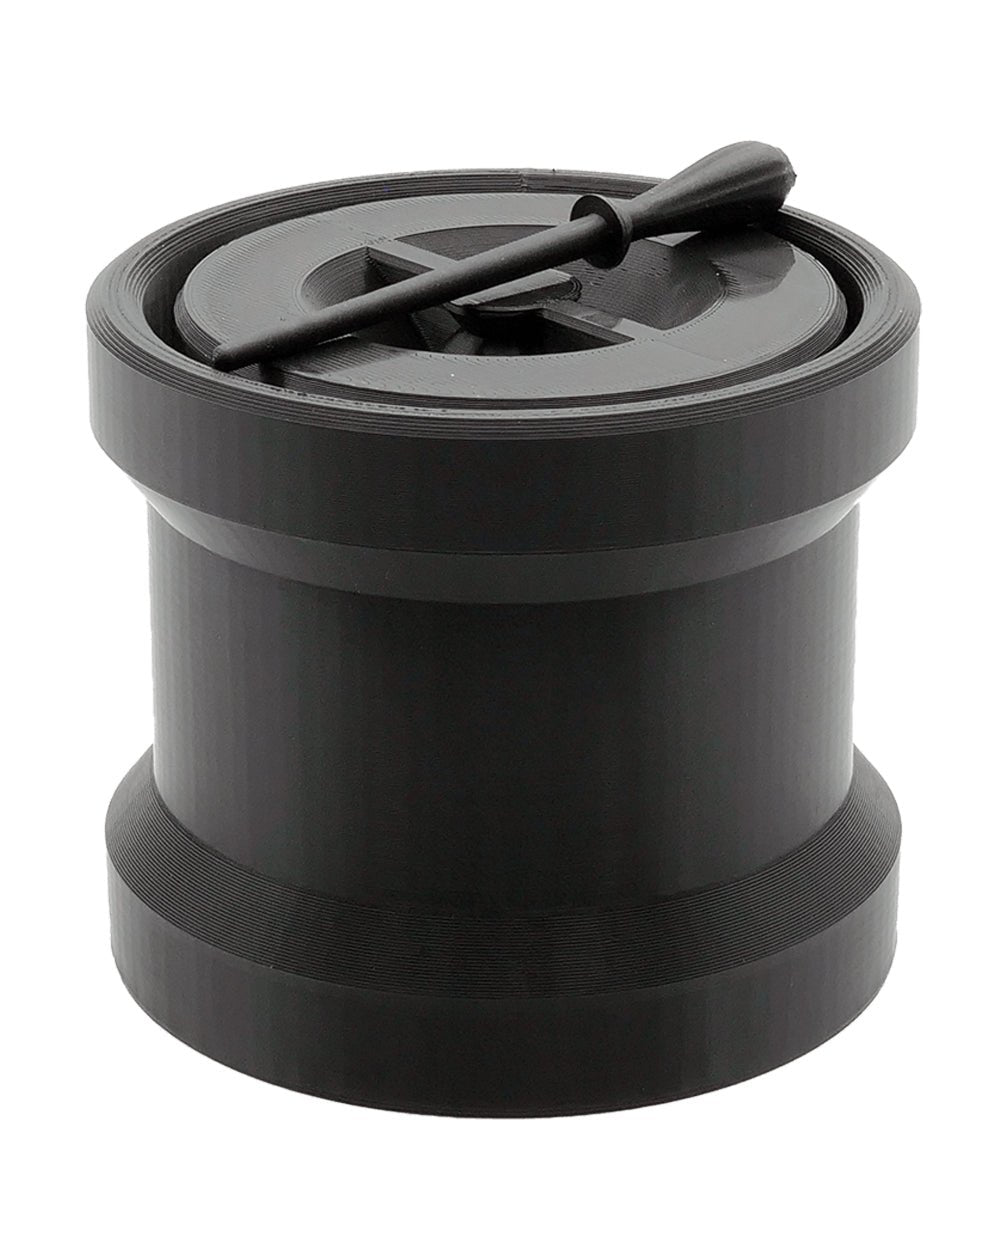 HUMBOLDT | Black Pre-Rolled Cones Filling Machine Starter Kit 84mm | Fill 55 Cones Per Run - 2